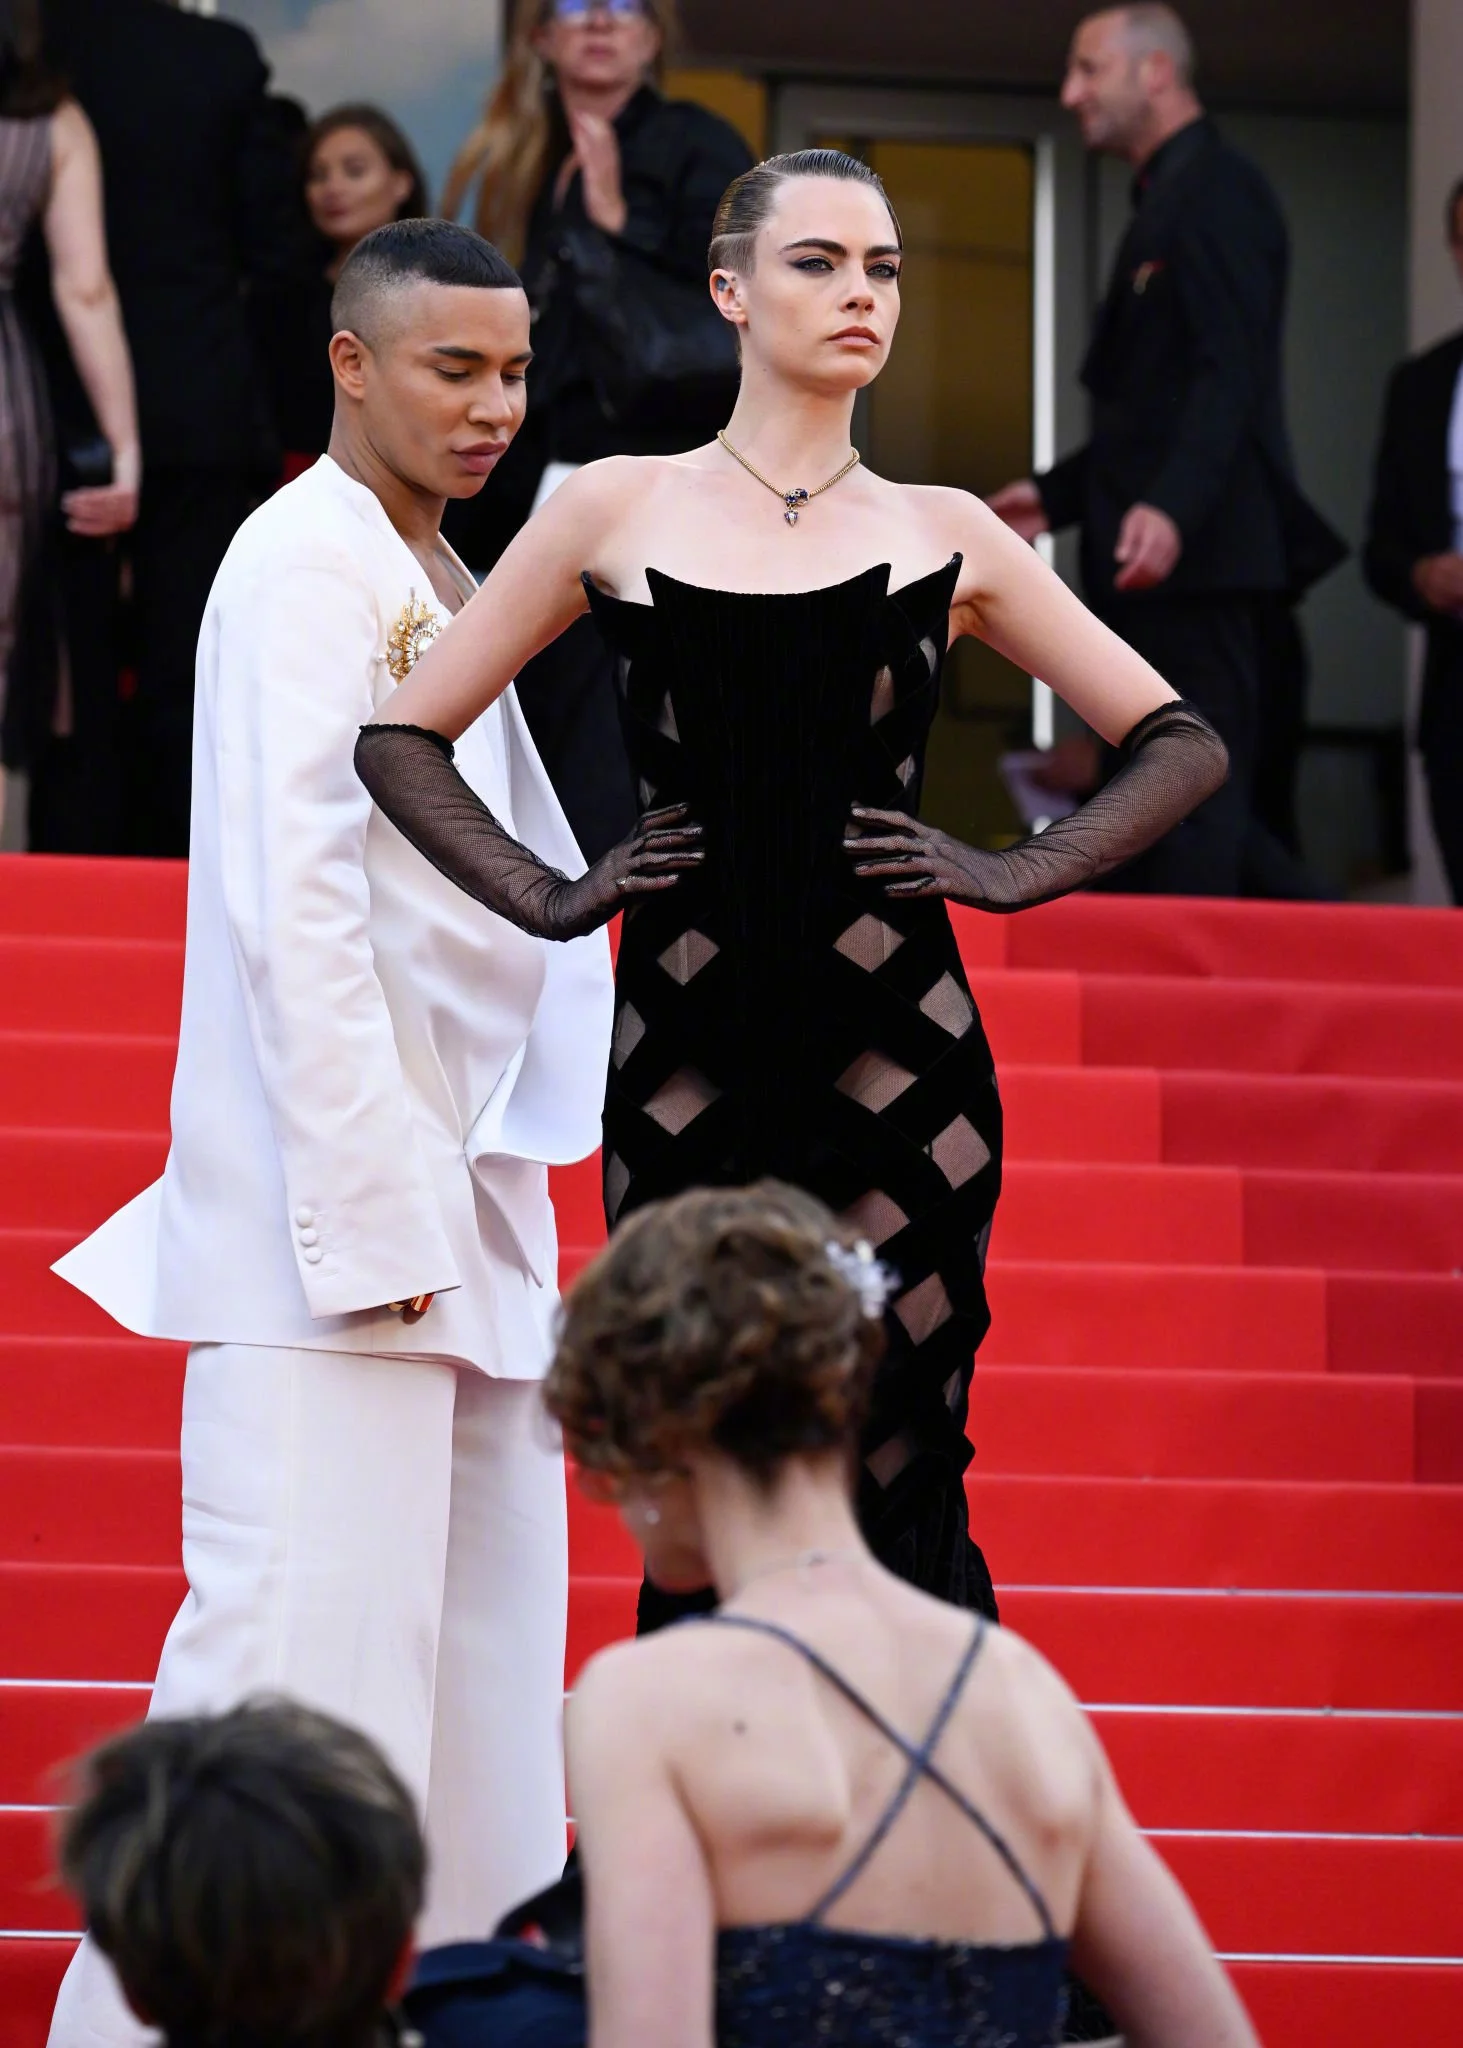 Cara Delevingne at Cannes Film Festival 75th Anniversary Celebration